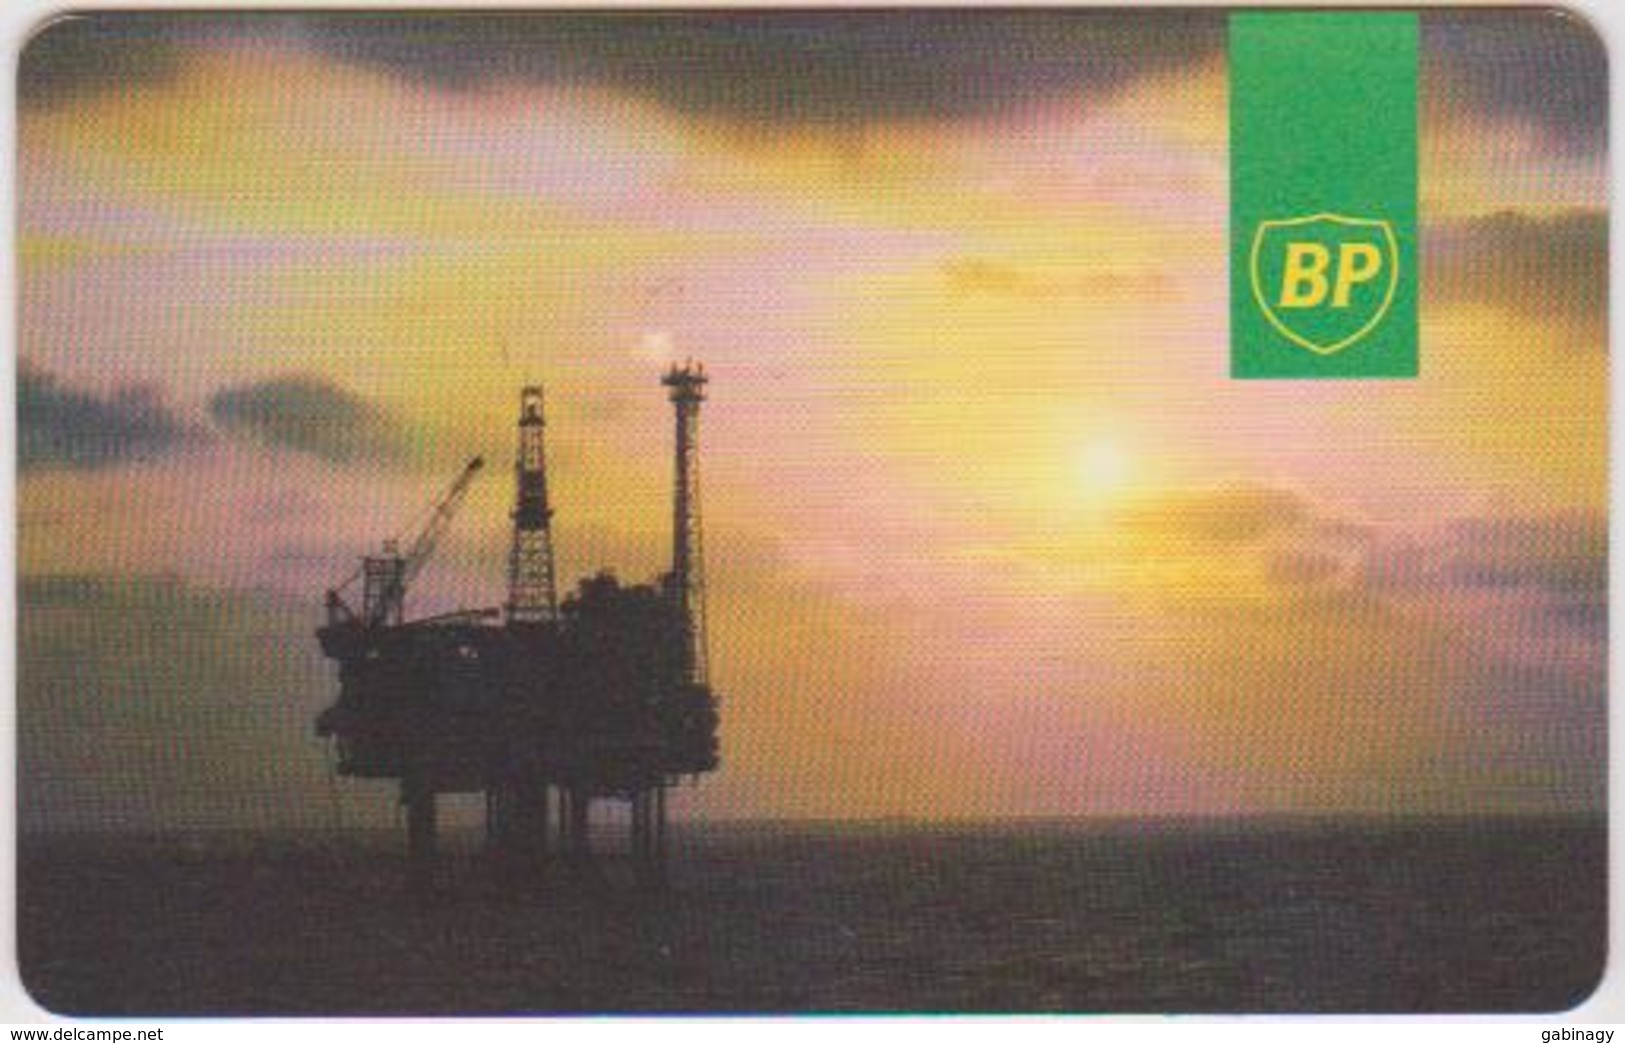 #09 - UNITED KINGDOM-07 - BP - 50 UNITS - [ 2] Oil Drilling Rig